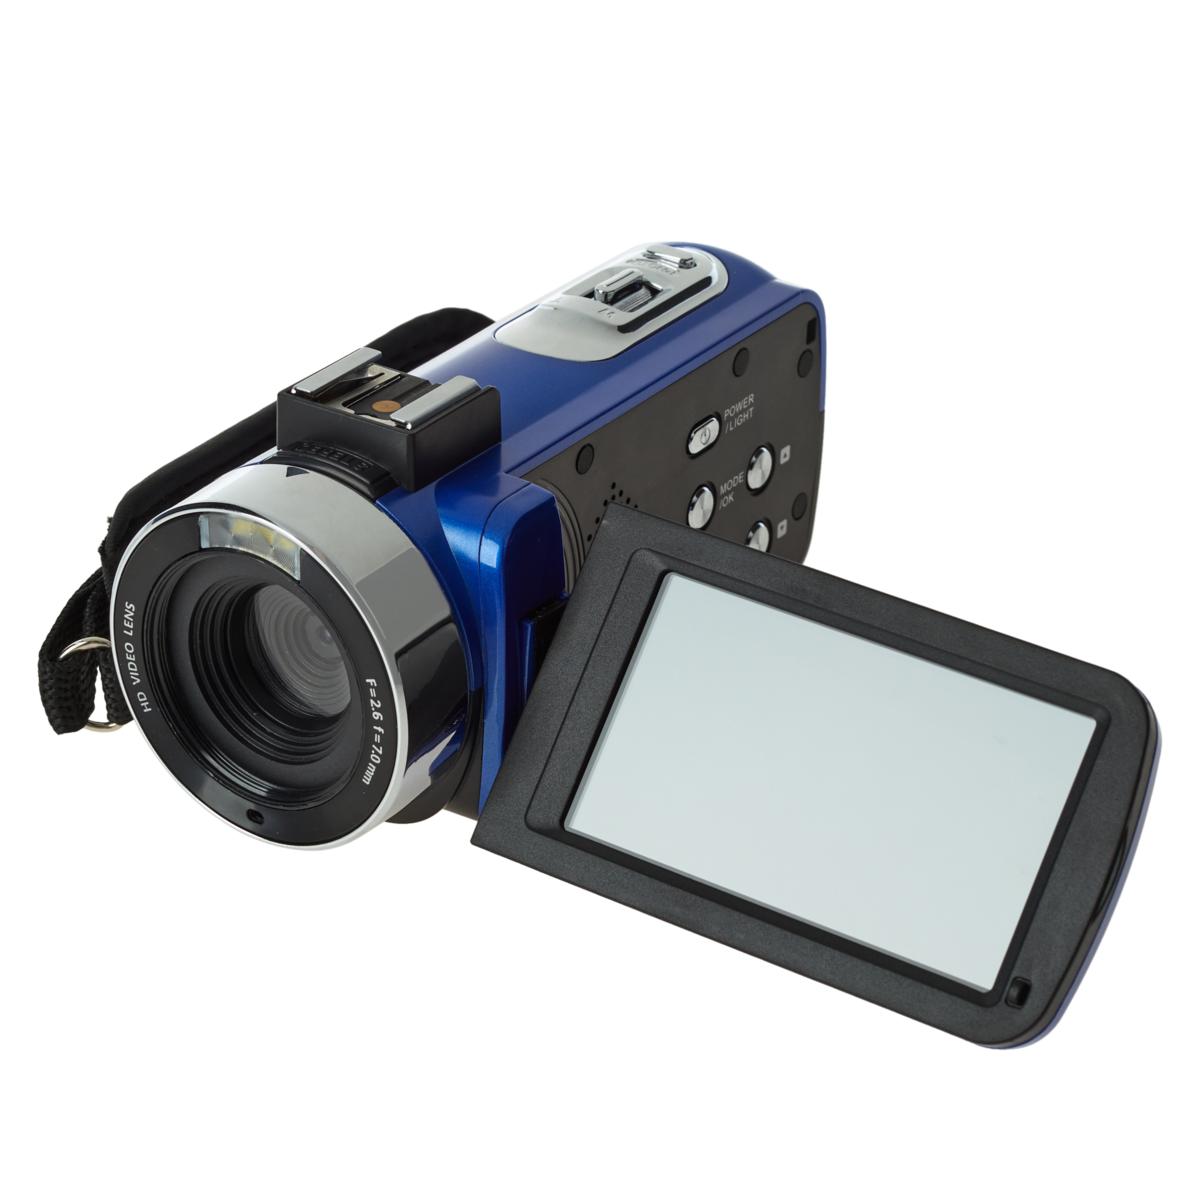 4k-digital-camcorder-id995hd-v1-blue-5